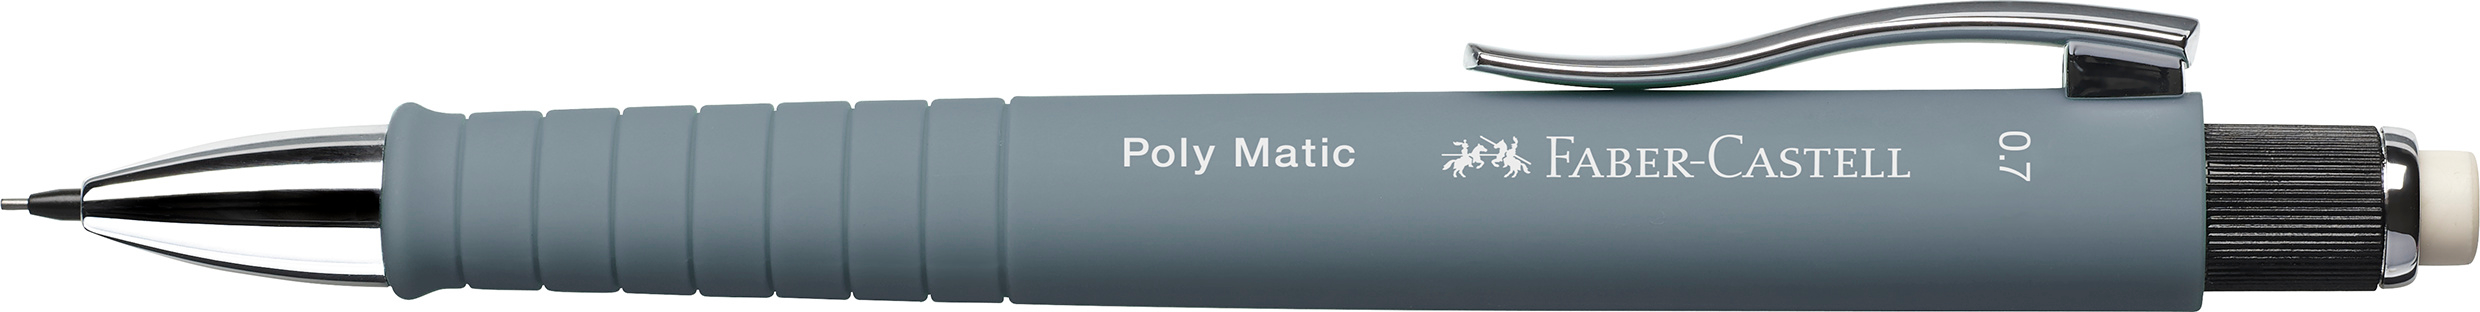 FABER-CASTELL Porte-mine Poly Matic 0.7mm 133388 gris gris